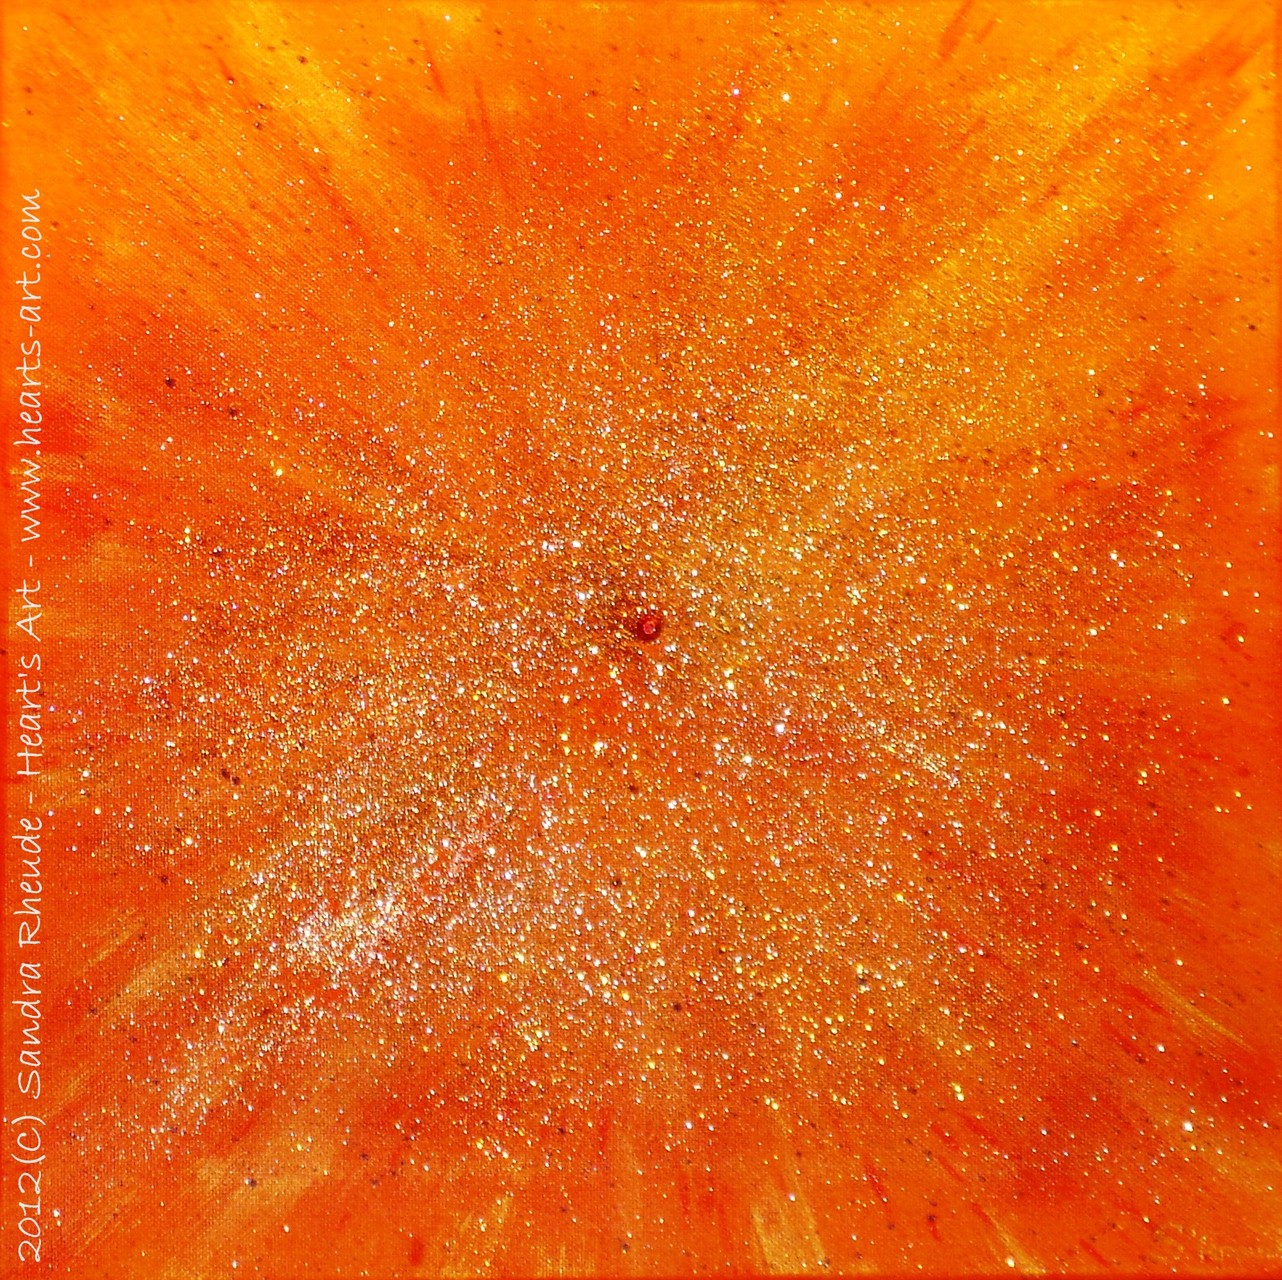 'Orange Energy' - 2012/71 - Acryl auf Leinwand - 40 x 40 cm - verkauft